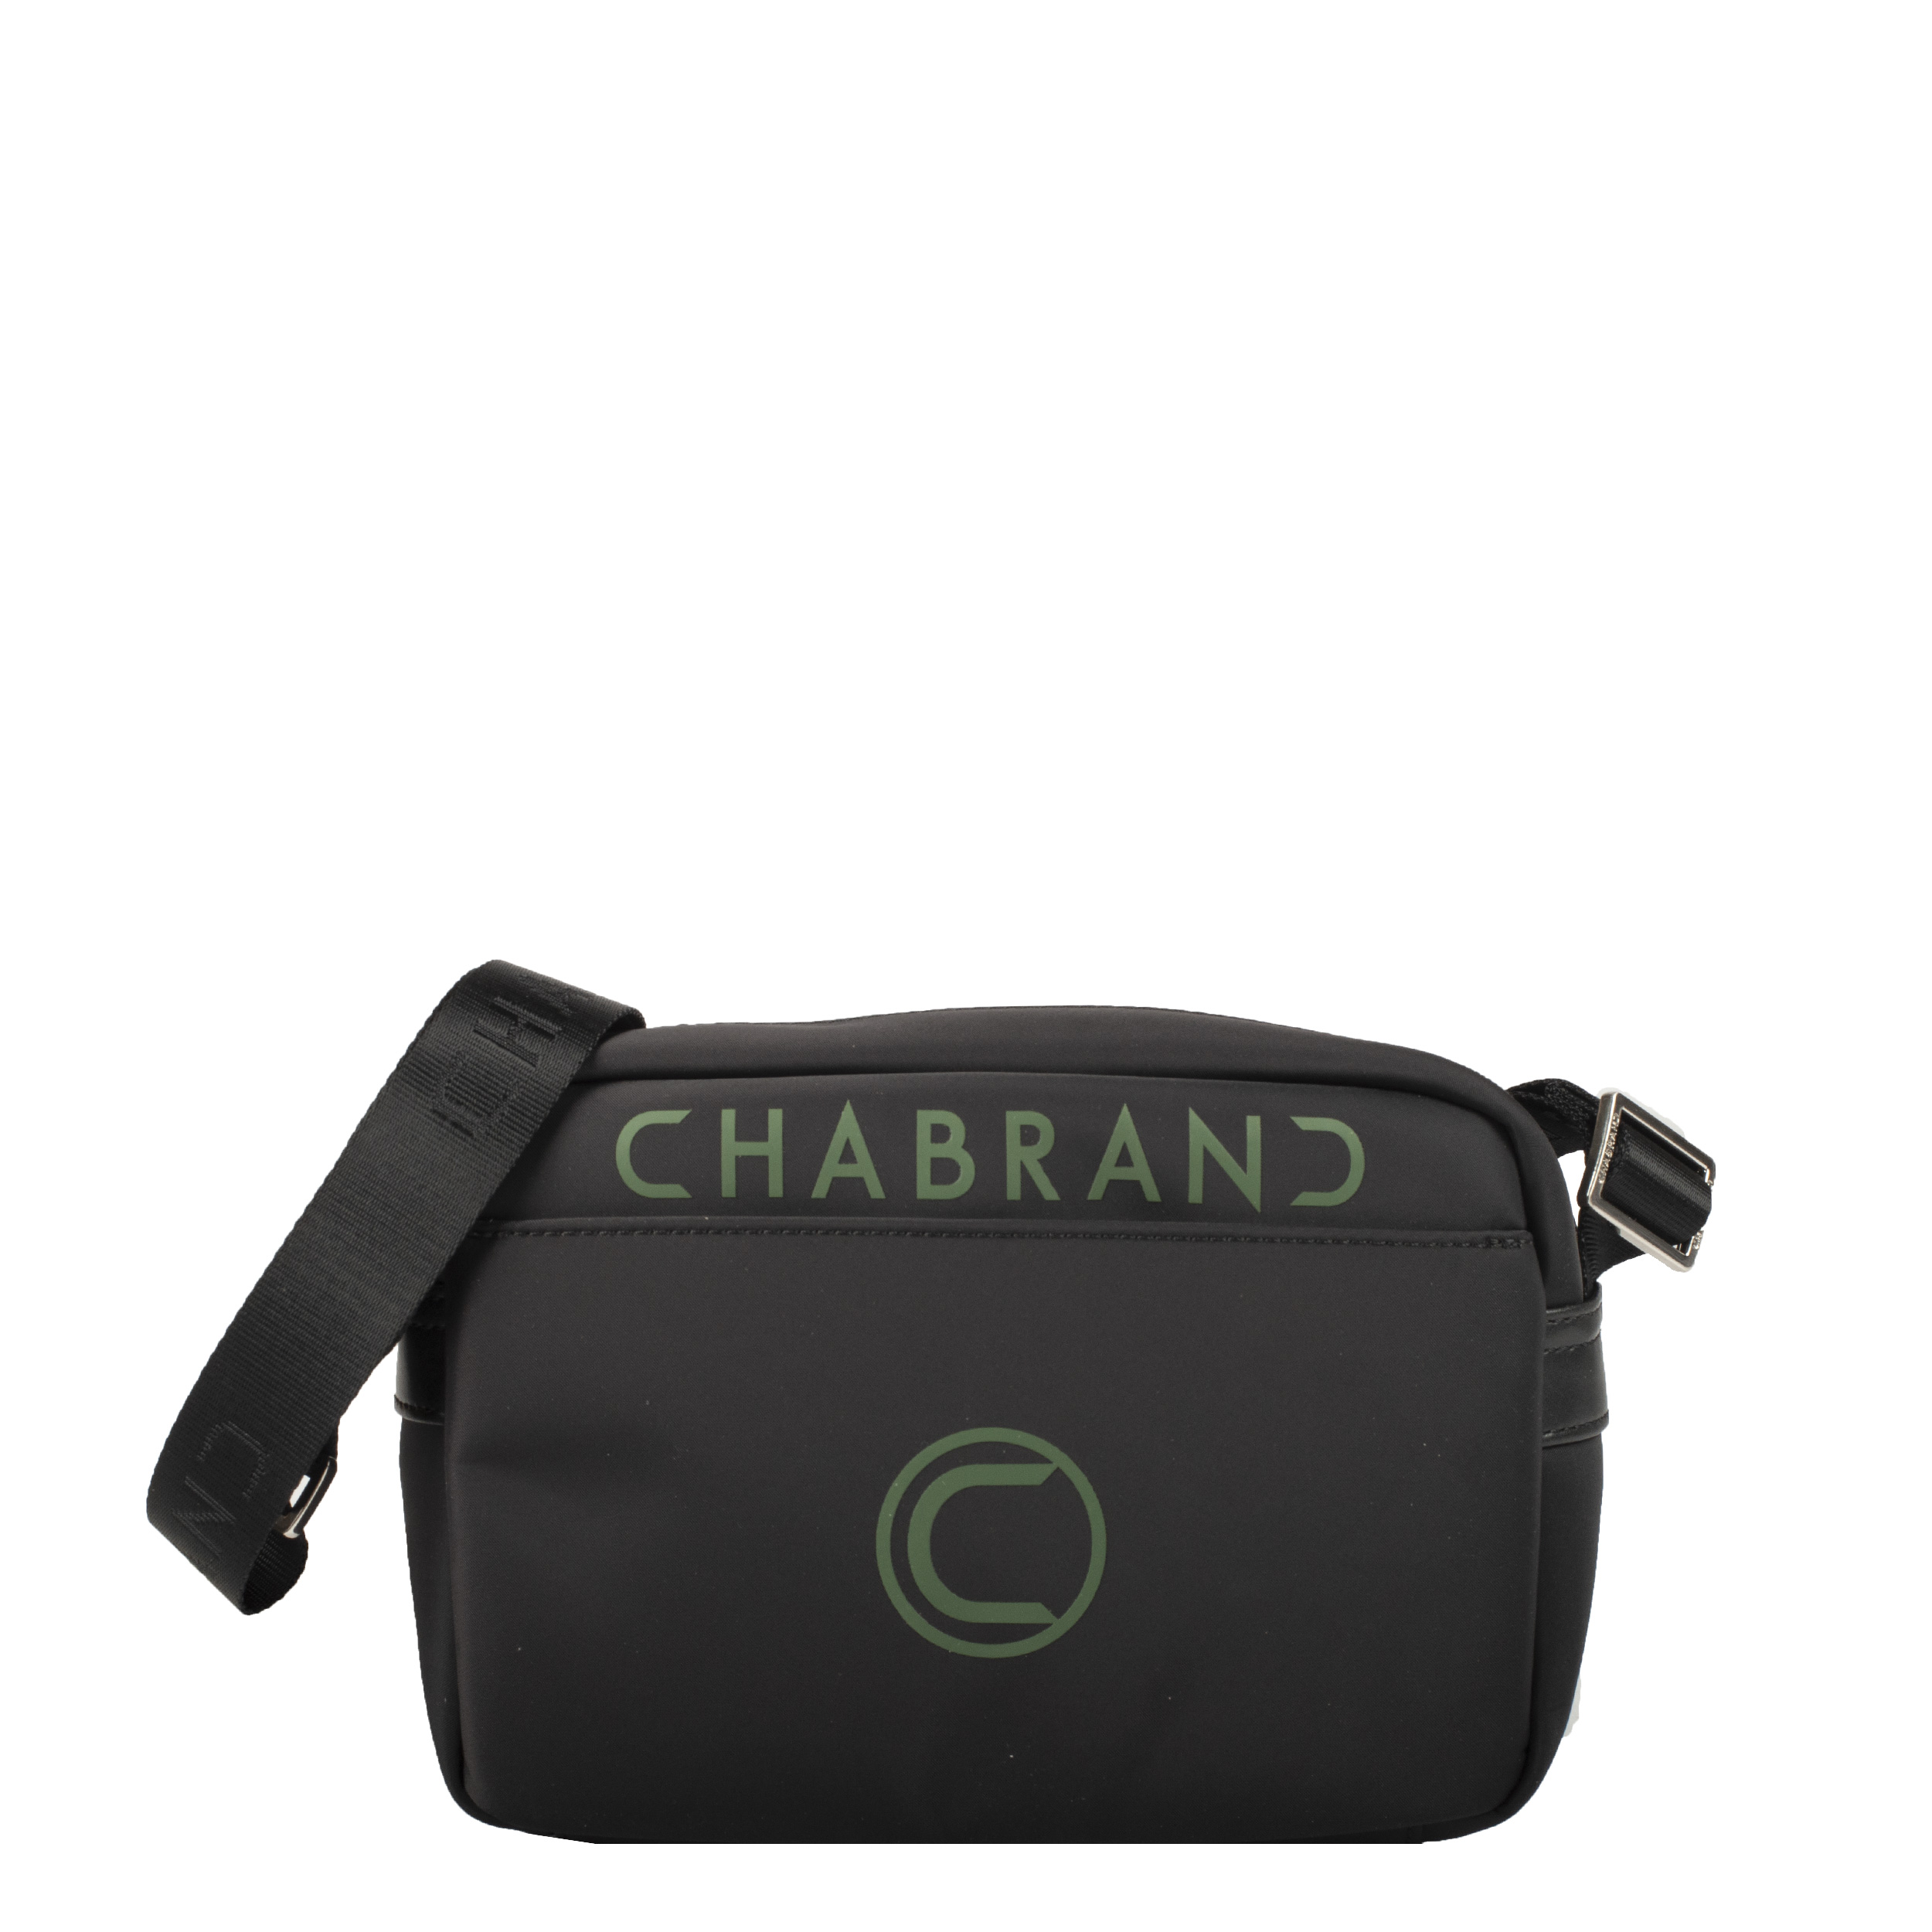 Sacoche Chabrand 81039 noir vert